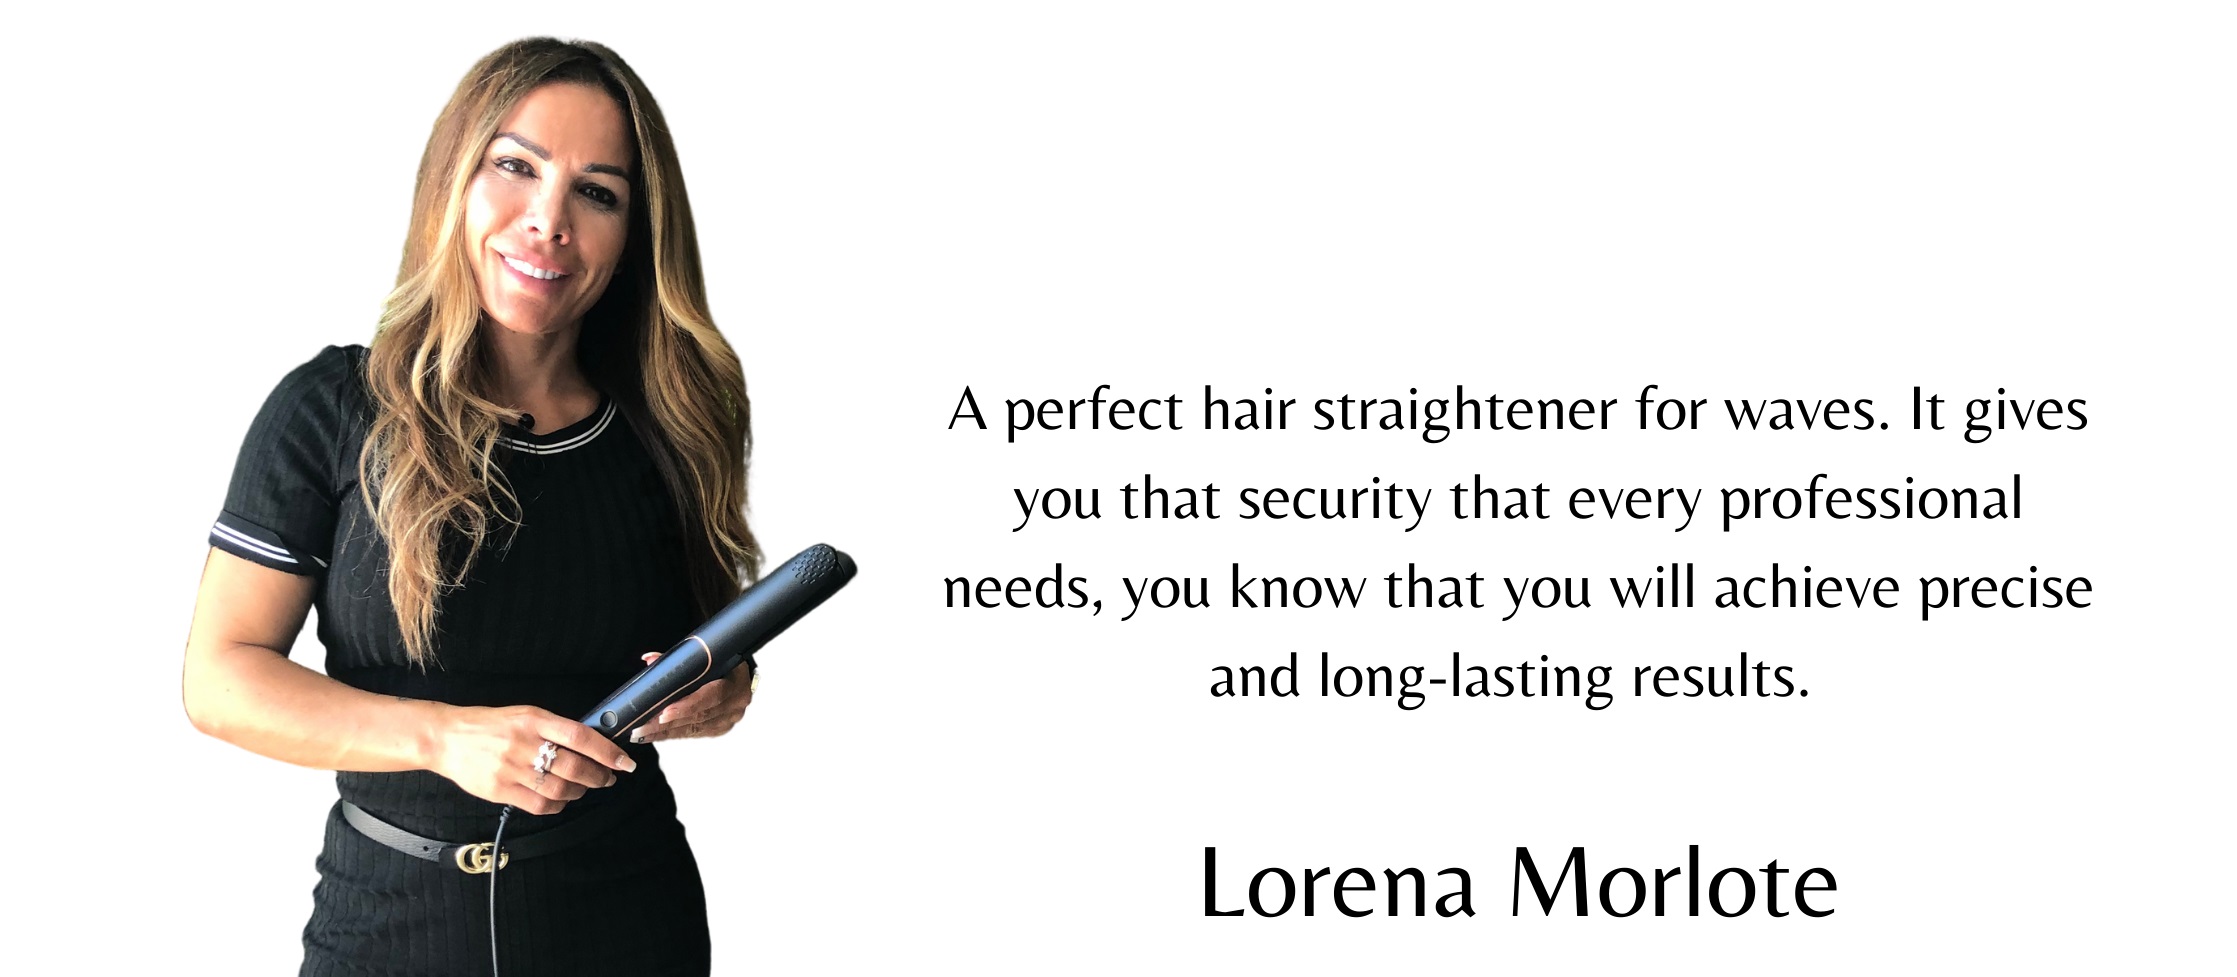 Lorena Morlote about the Termix Wild hair straightener